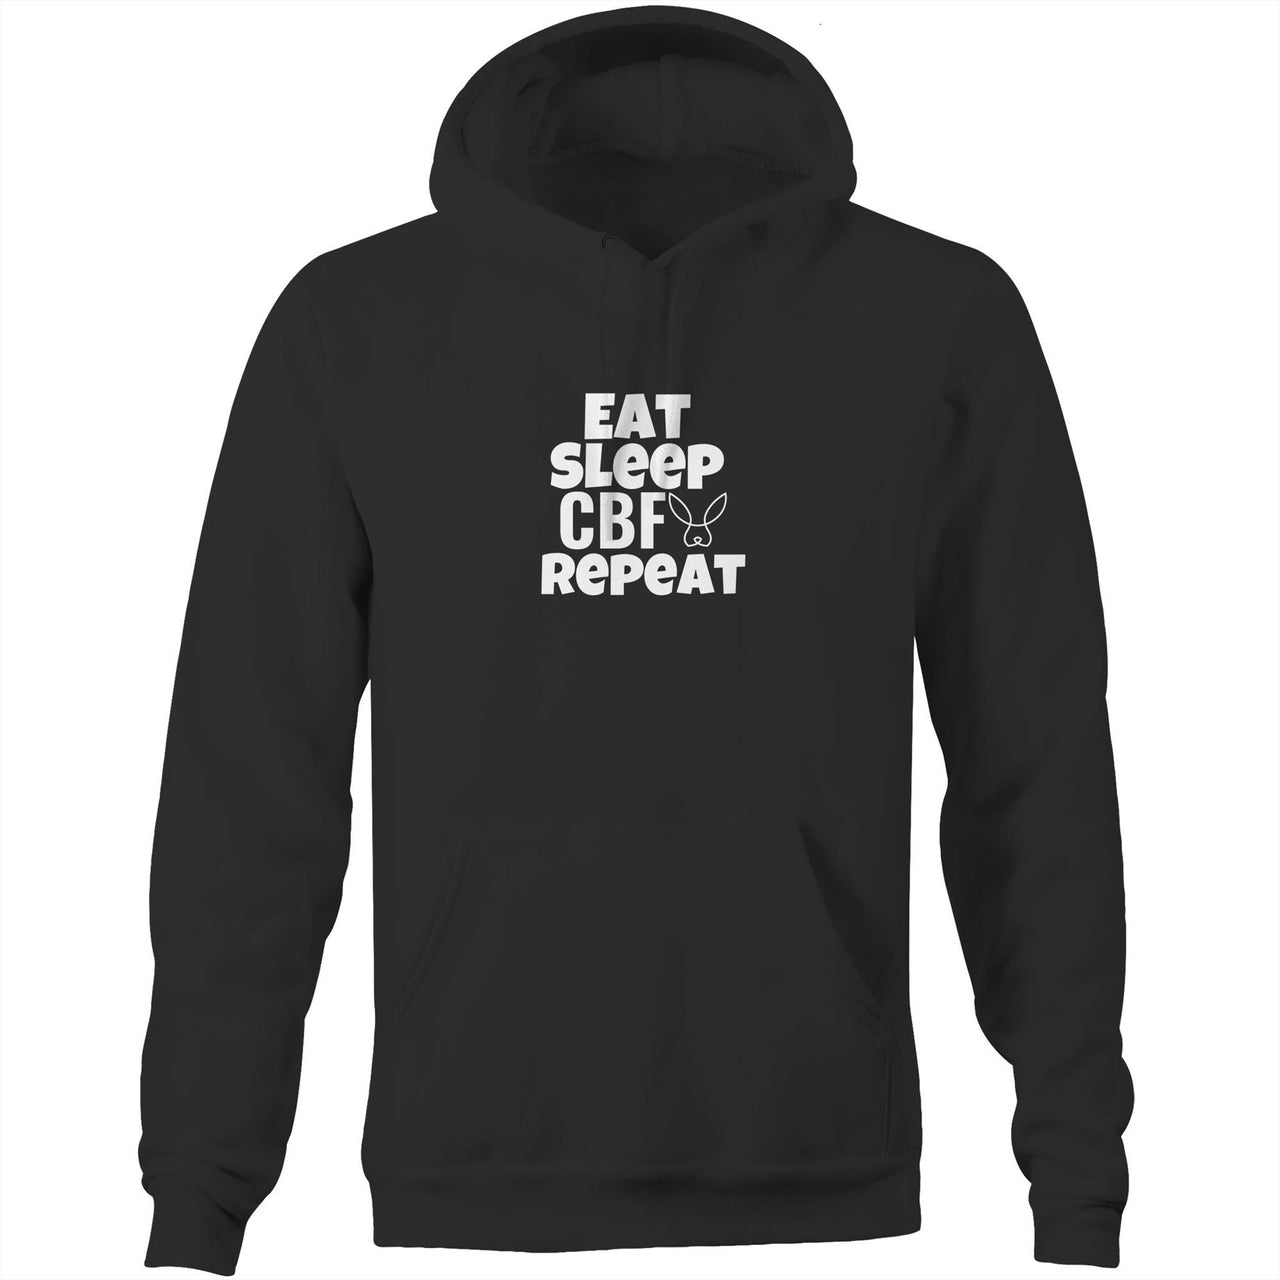 Eat Sleep CBF Repeat Pocket Hoodie Sweatshirt Black by CBF Clothing